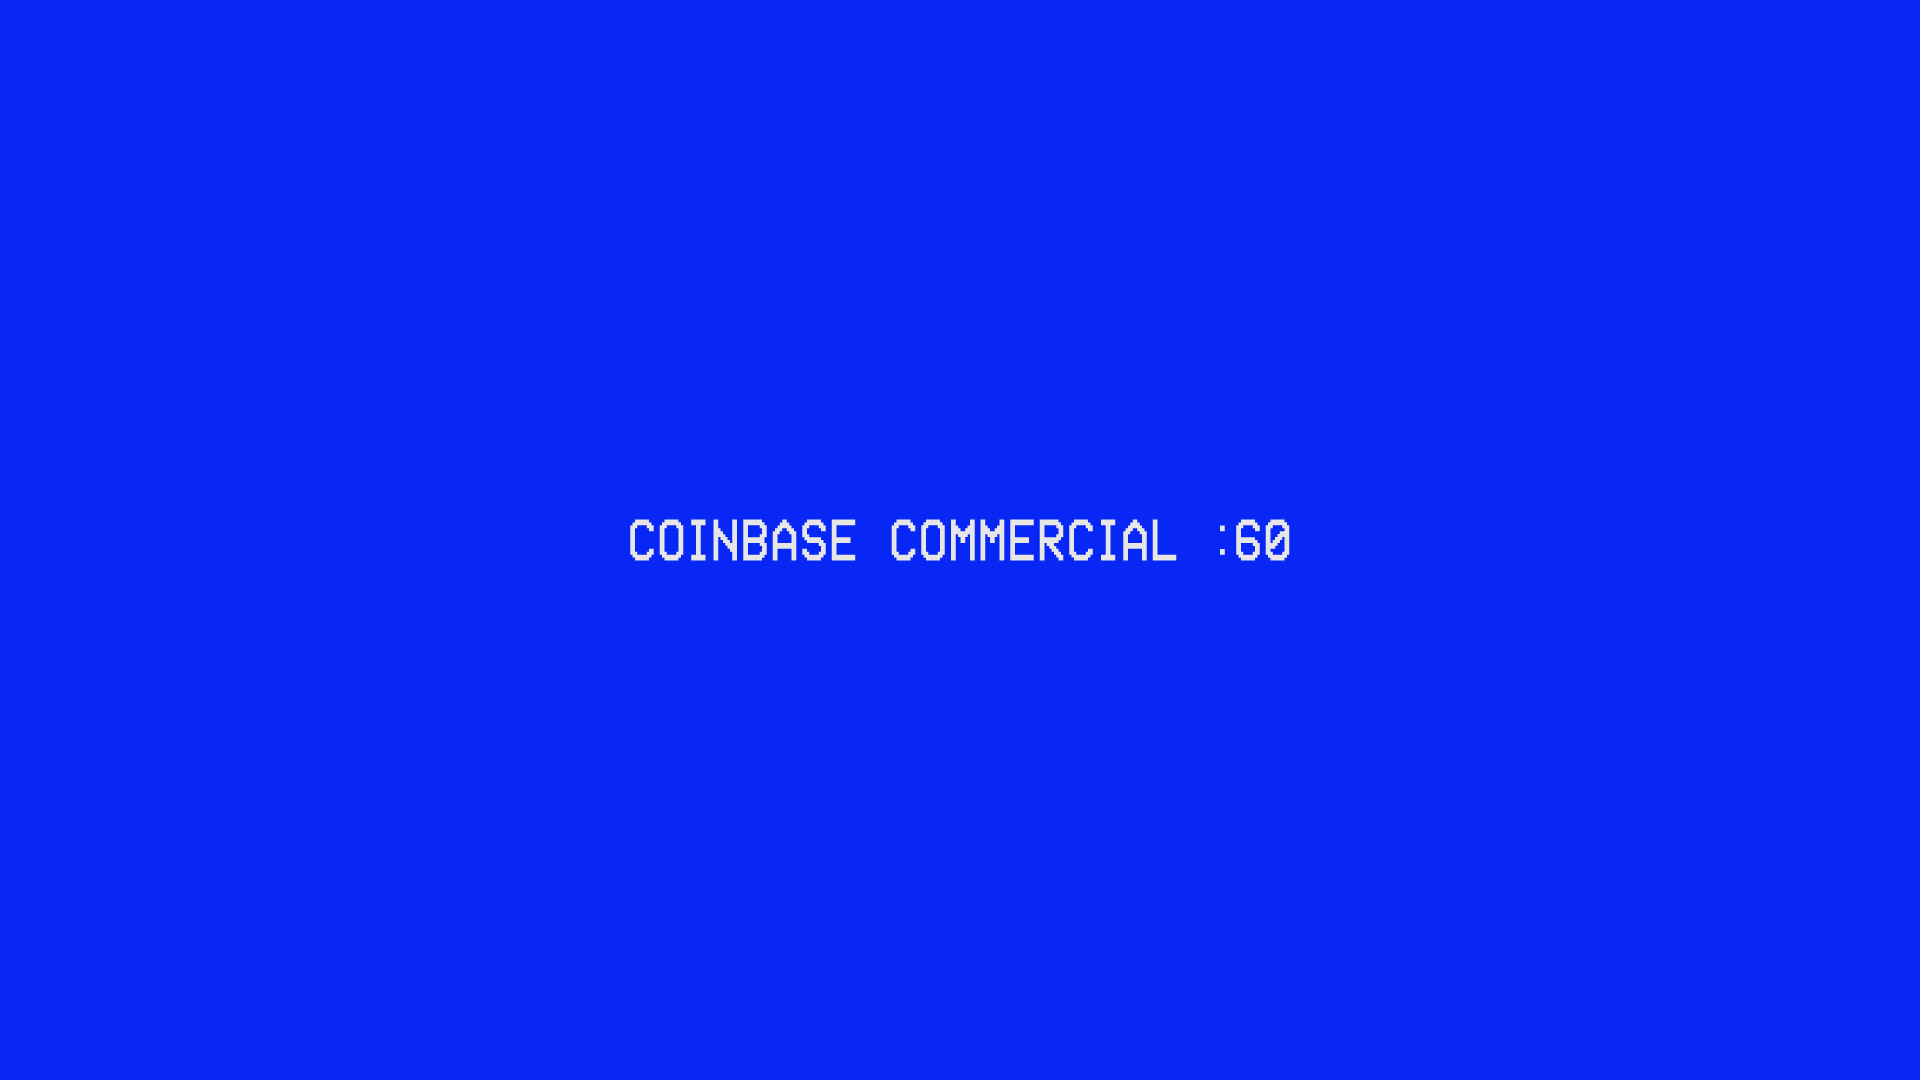 Coinbase QR Code Super Bowl Ad 